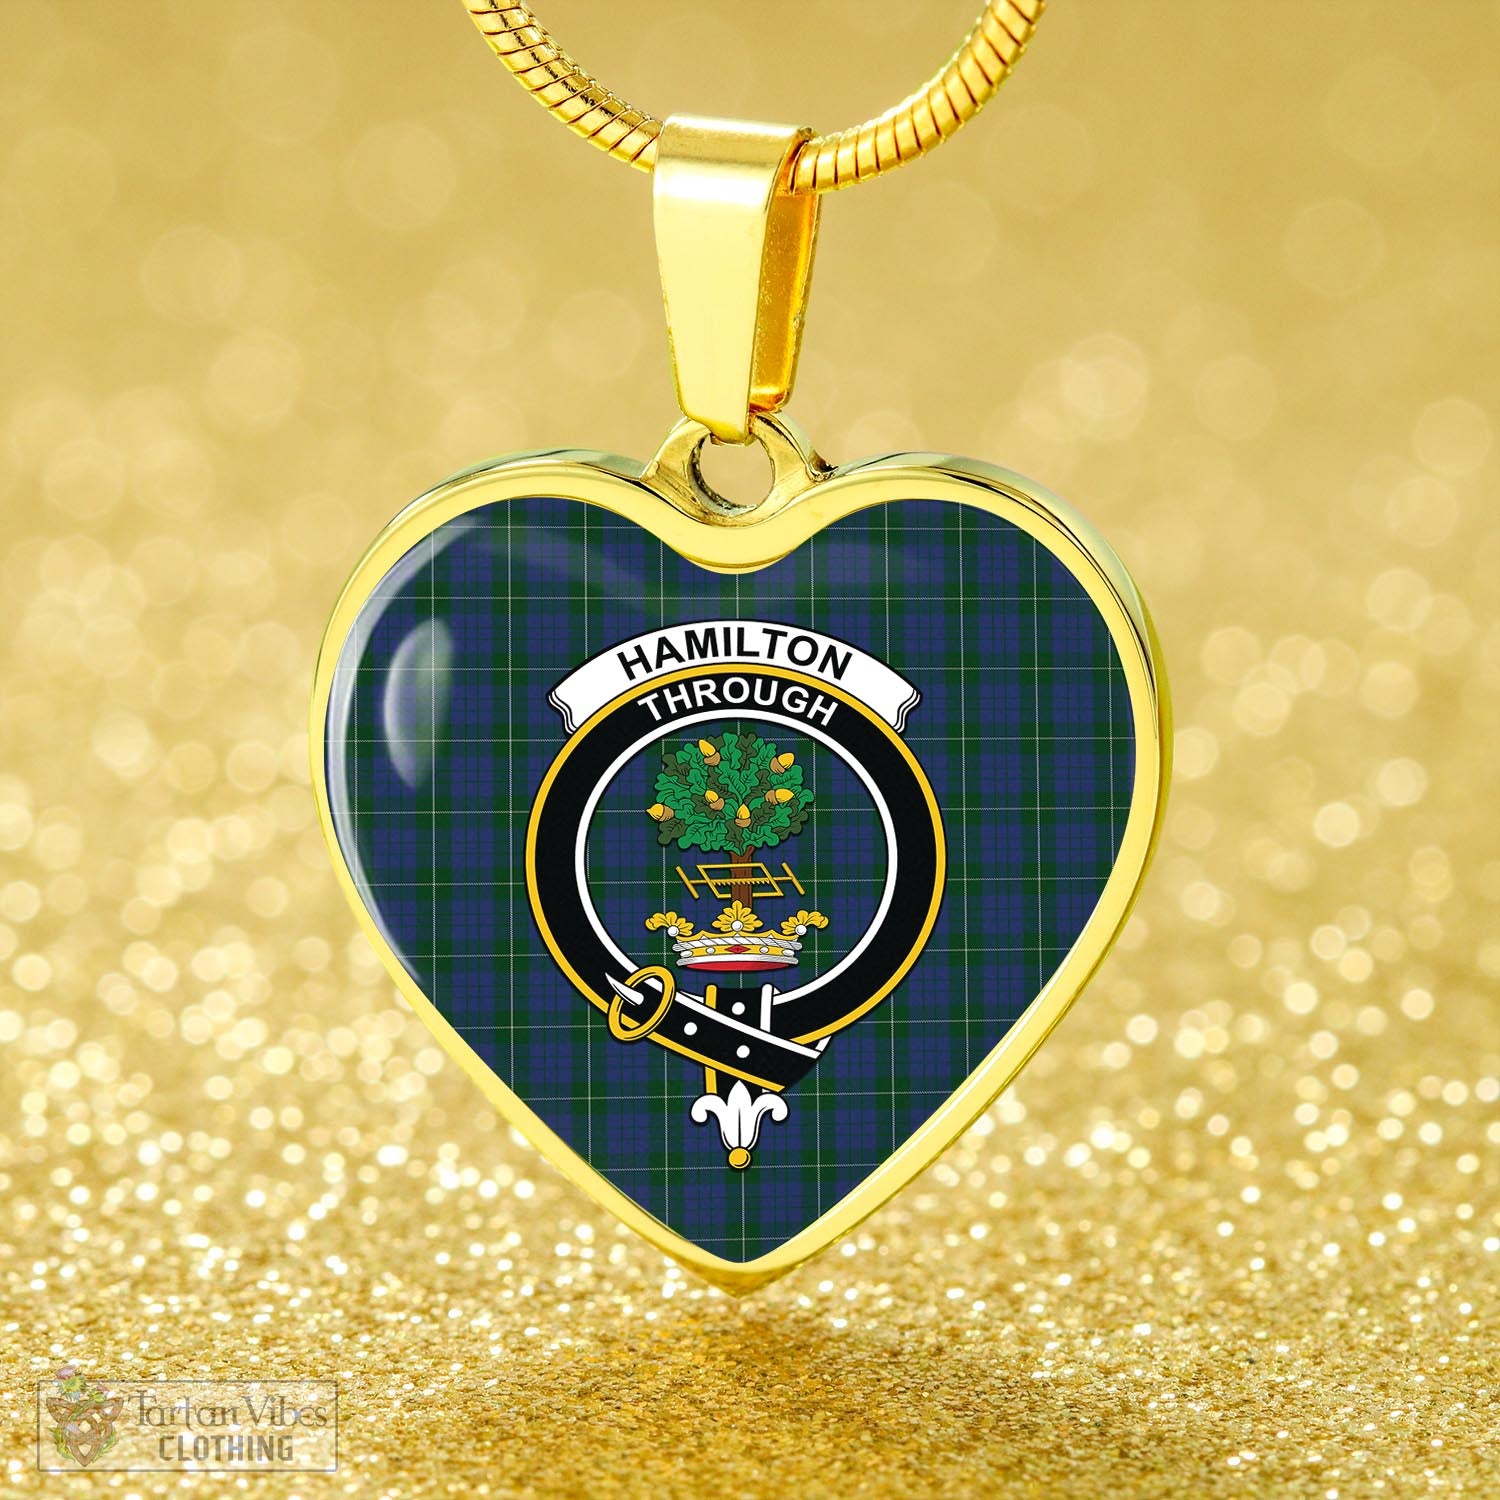 Tartan Vibes Clothing Hamilton Hunting Tartan Heart Necklace with Family Crest